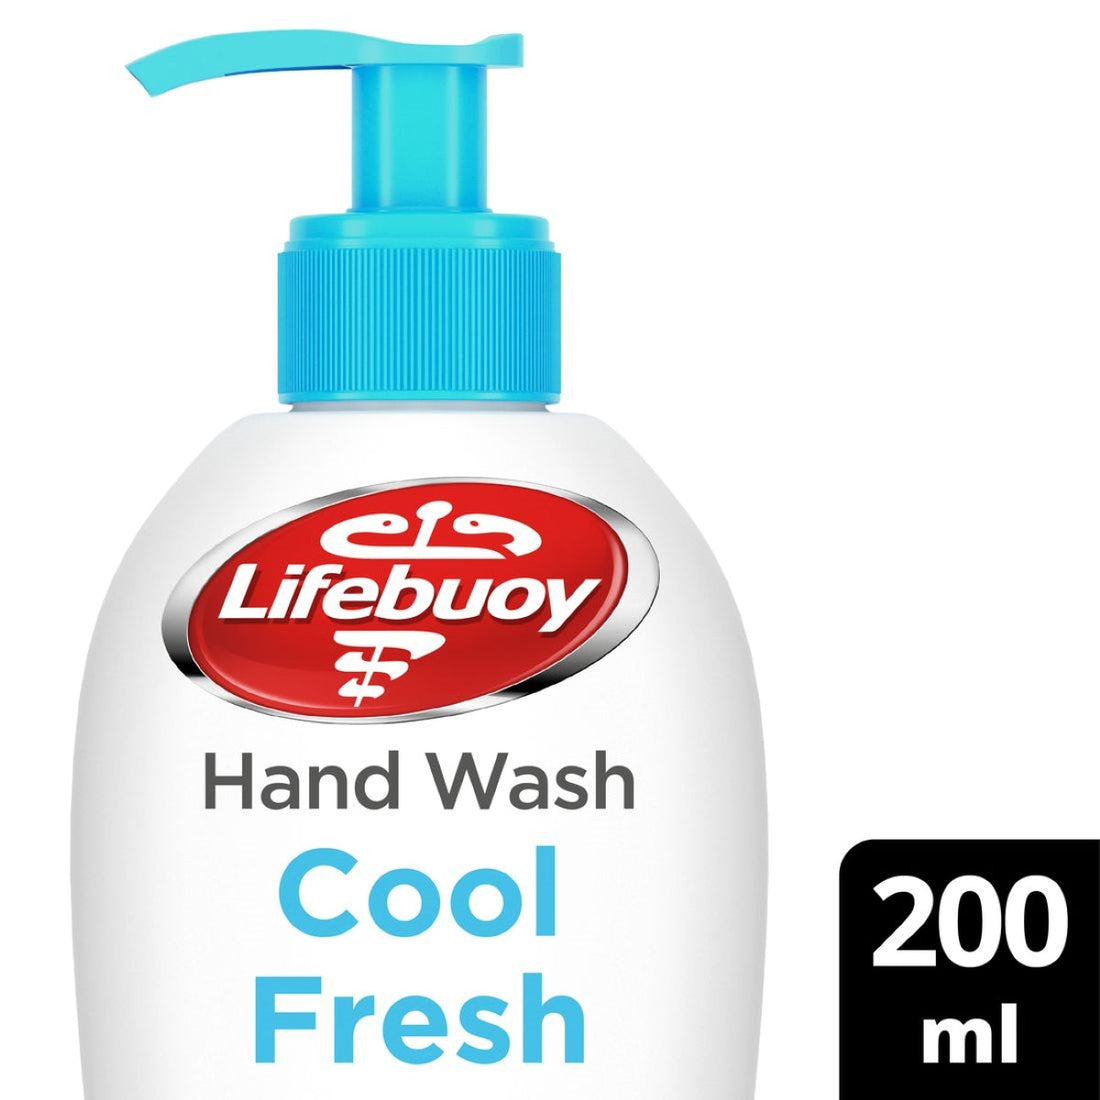 Lifebuoy Hand Wash Cool Fresh